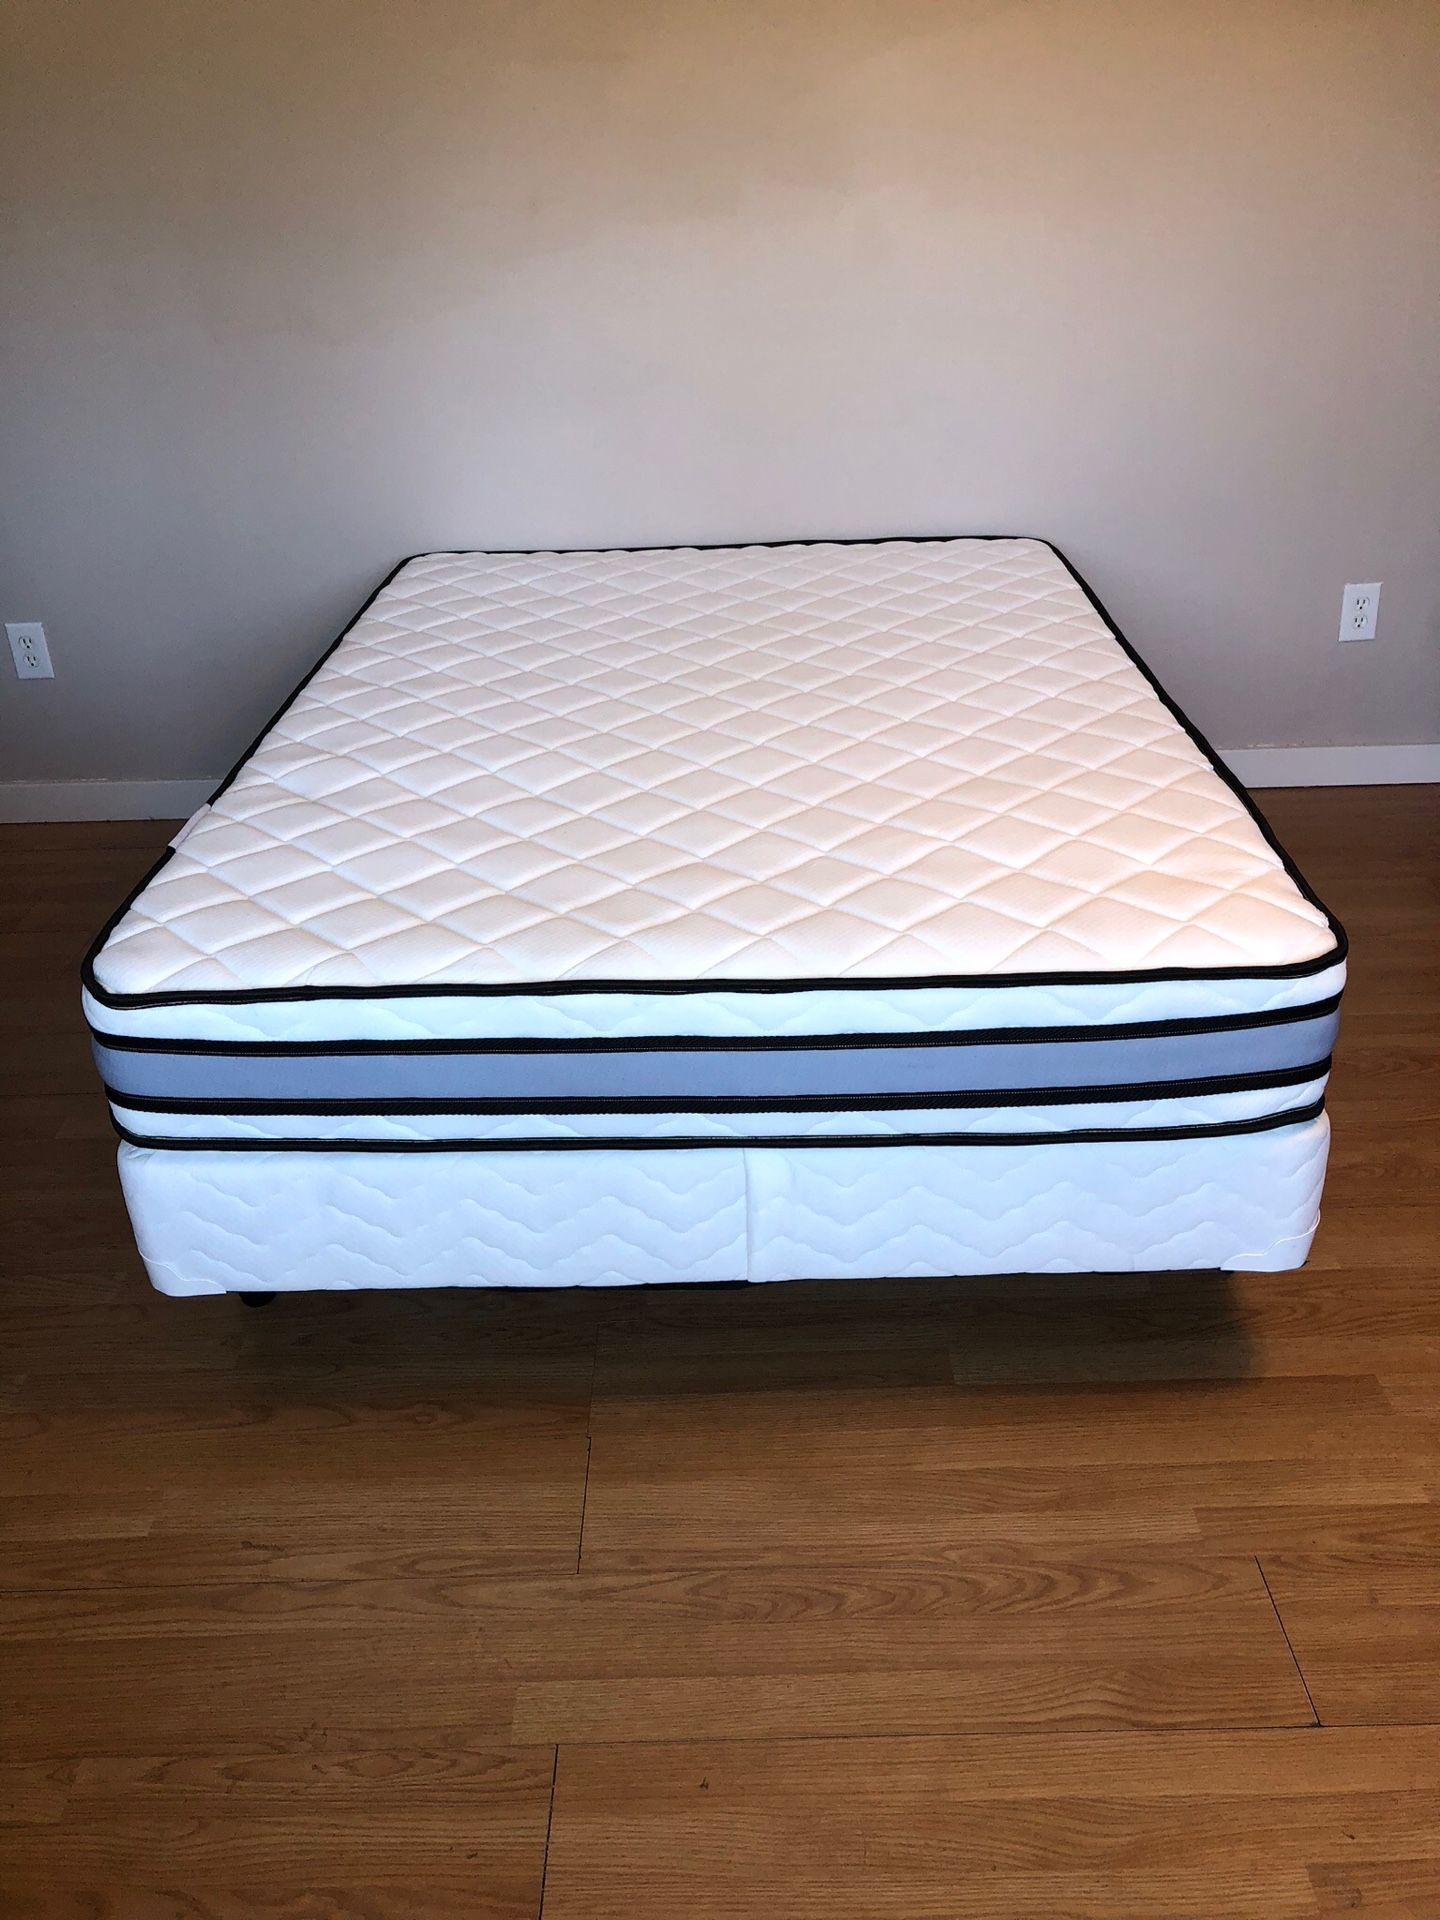 New full mattresses $189 each